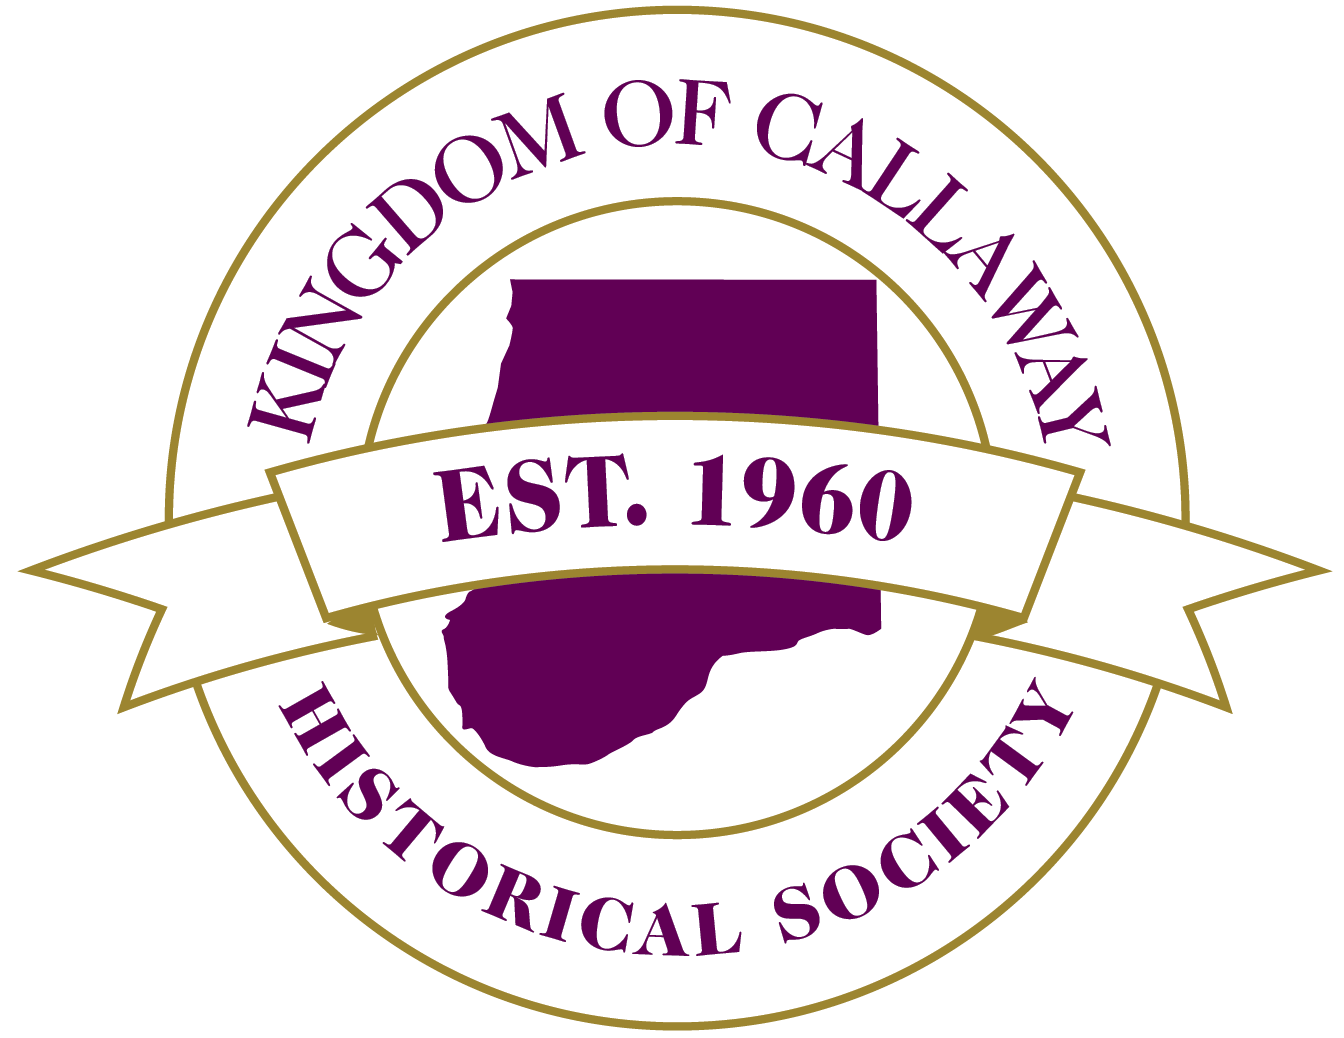 Kingdom of Callaway Historical Society